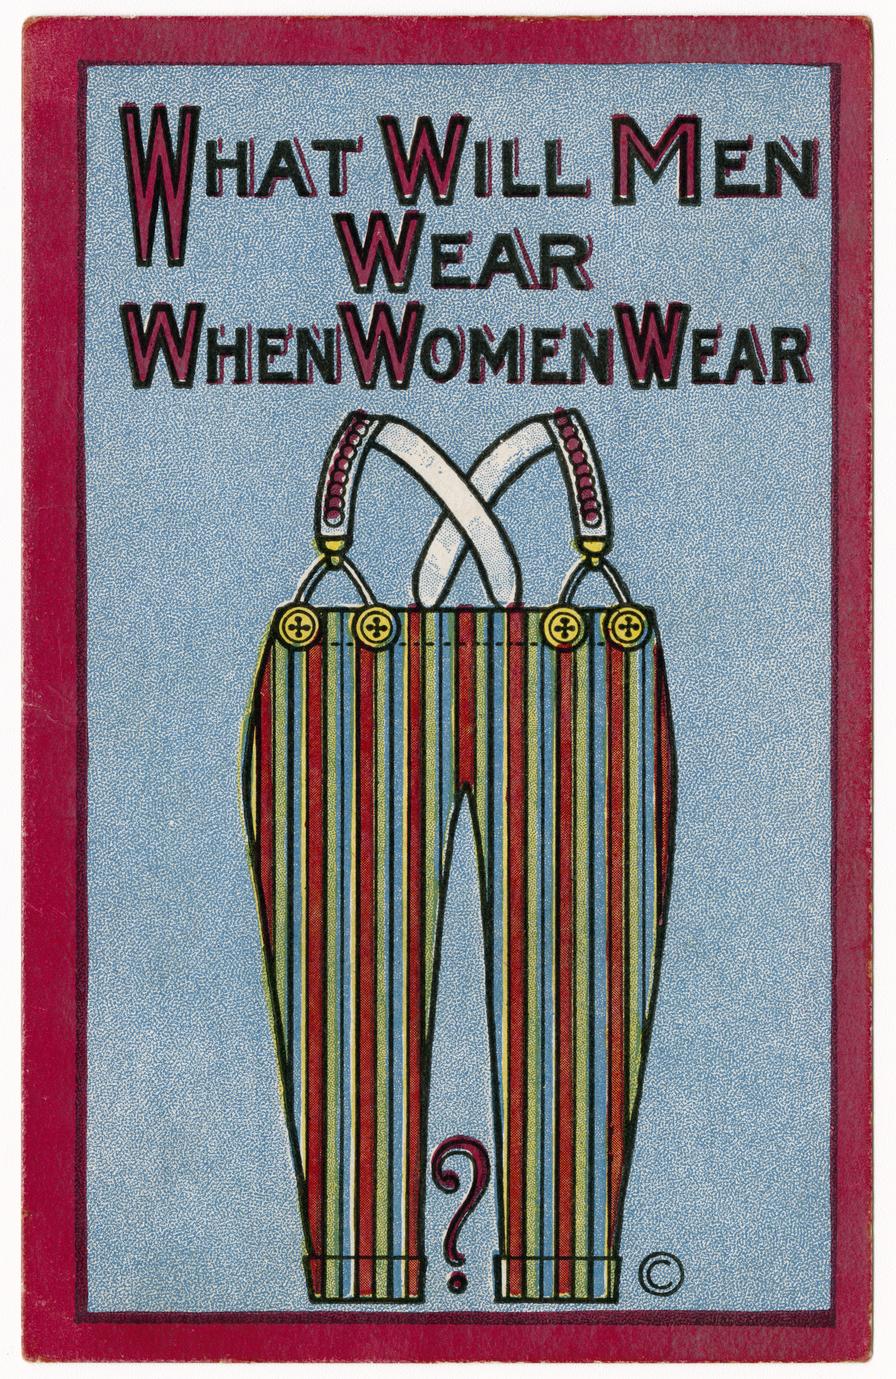 What will men wear, suffrage postcard (1 of 2)